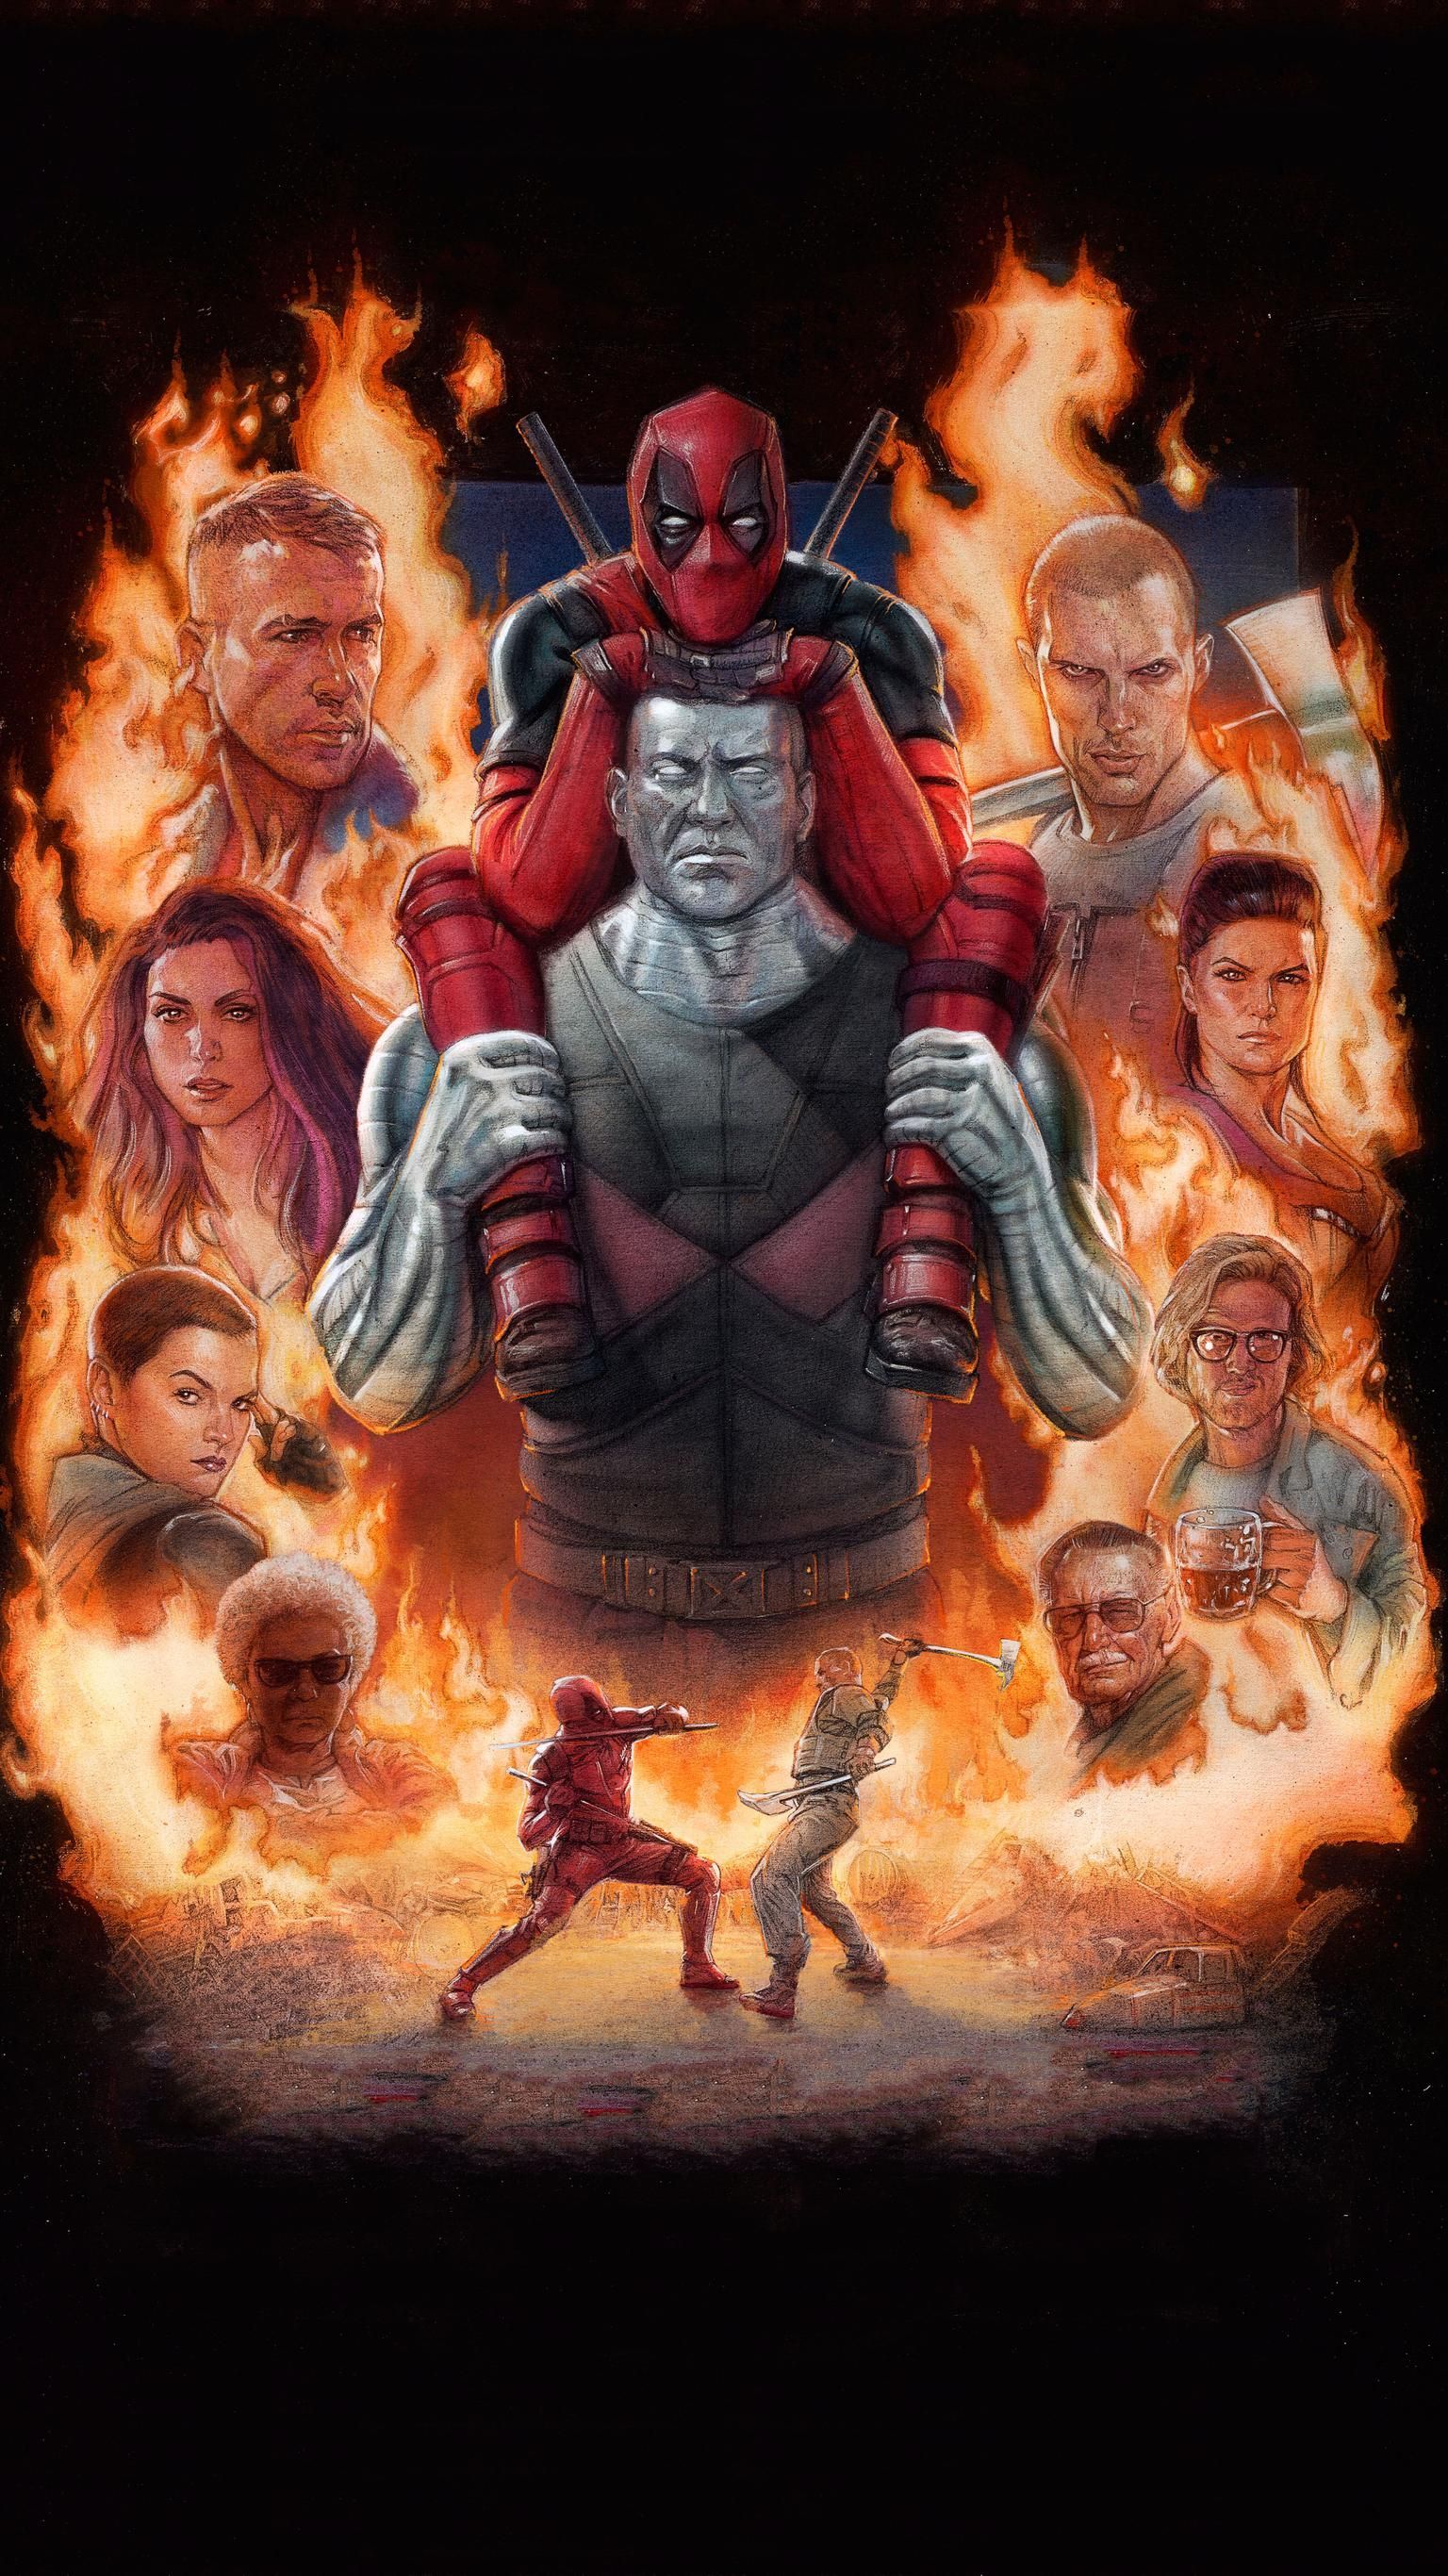 Deadpool (2016) Phone Wallpaper. Moviemania. Movie wallpaper, Deadpool, Phone wallpaper